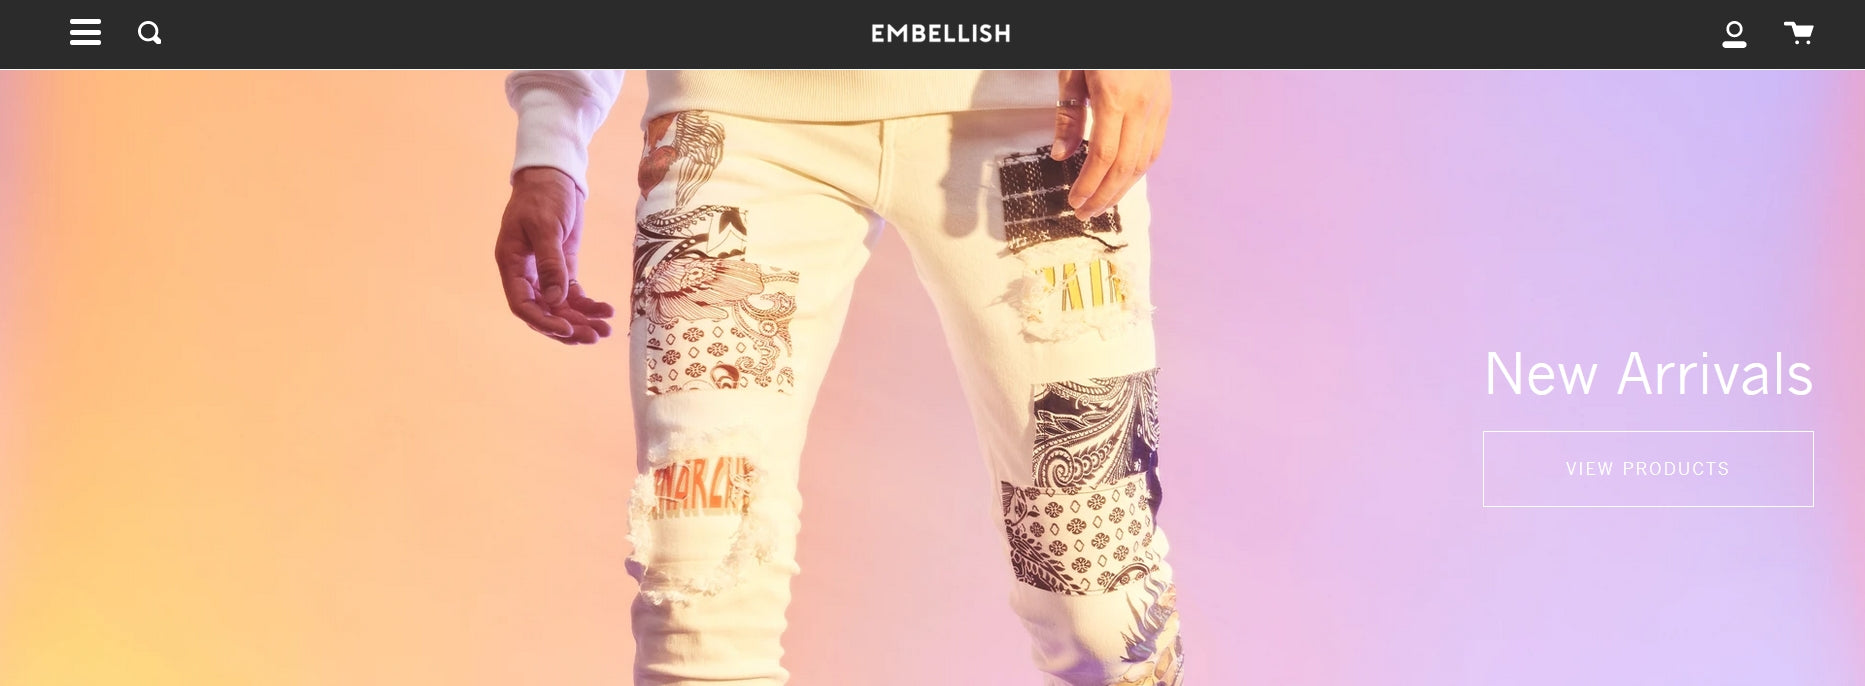 Embellish branding